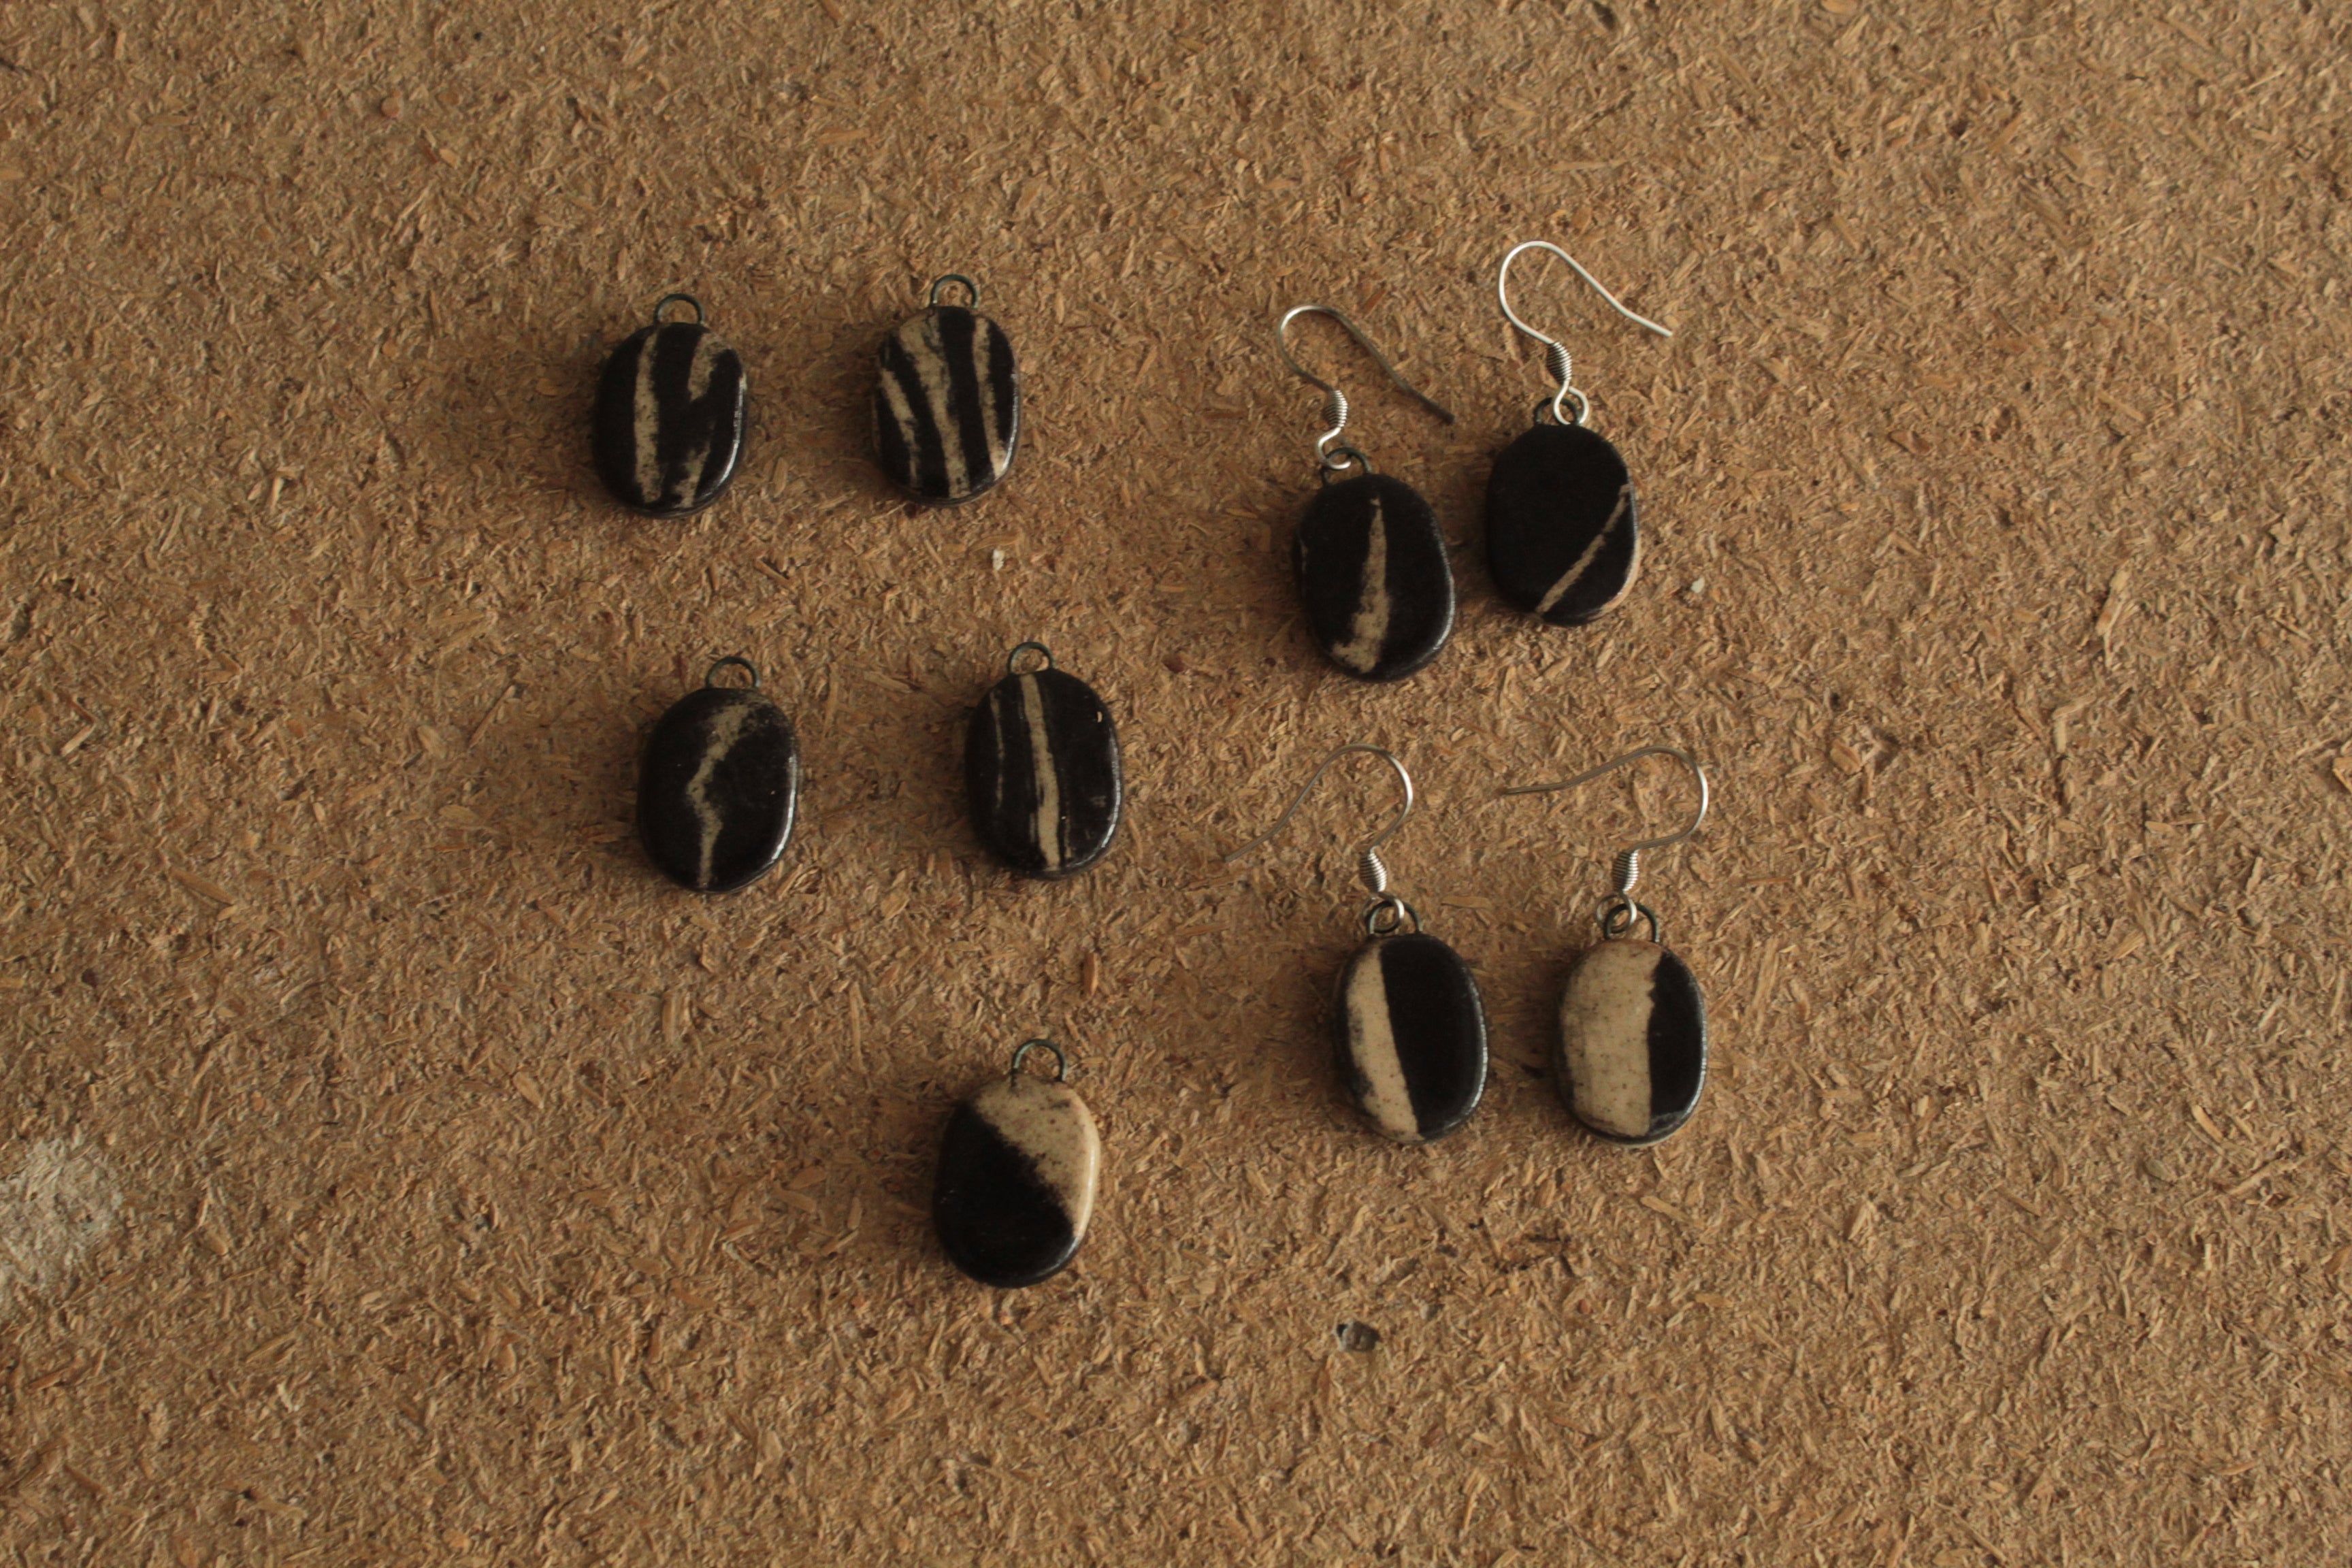 Small marble oval dangling earrings